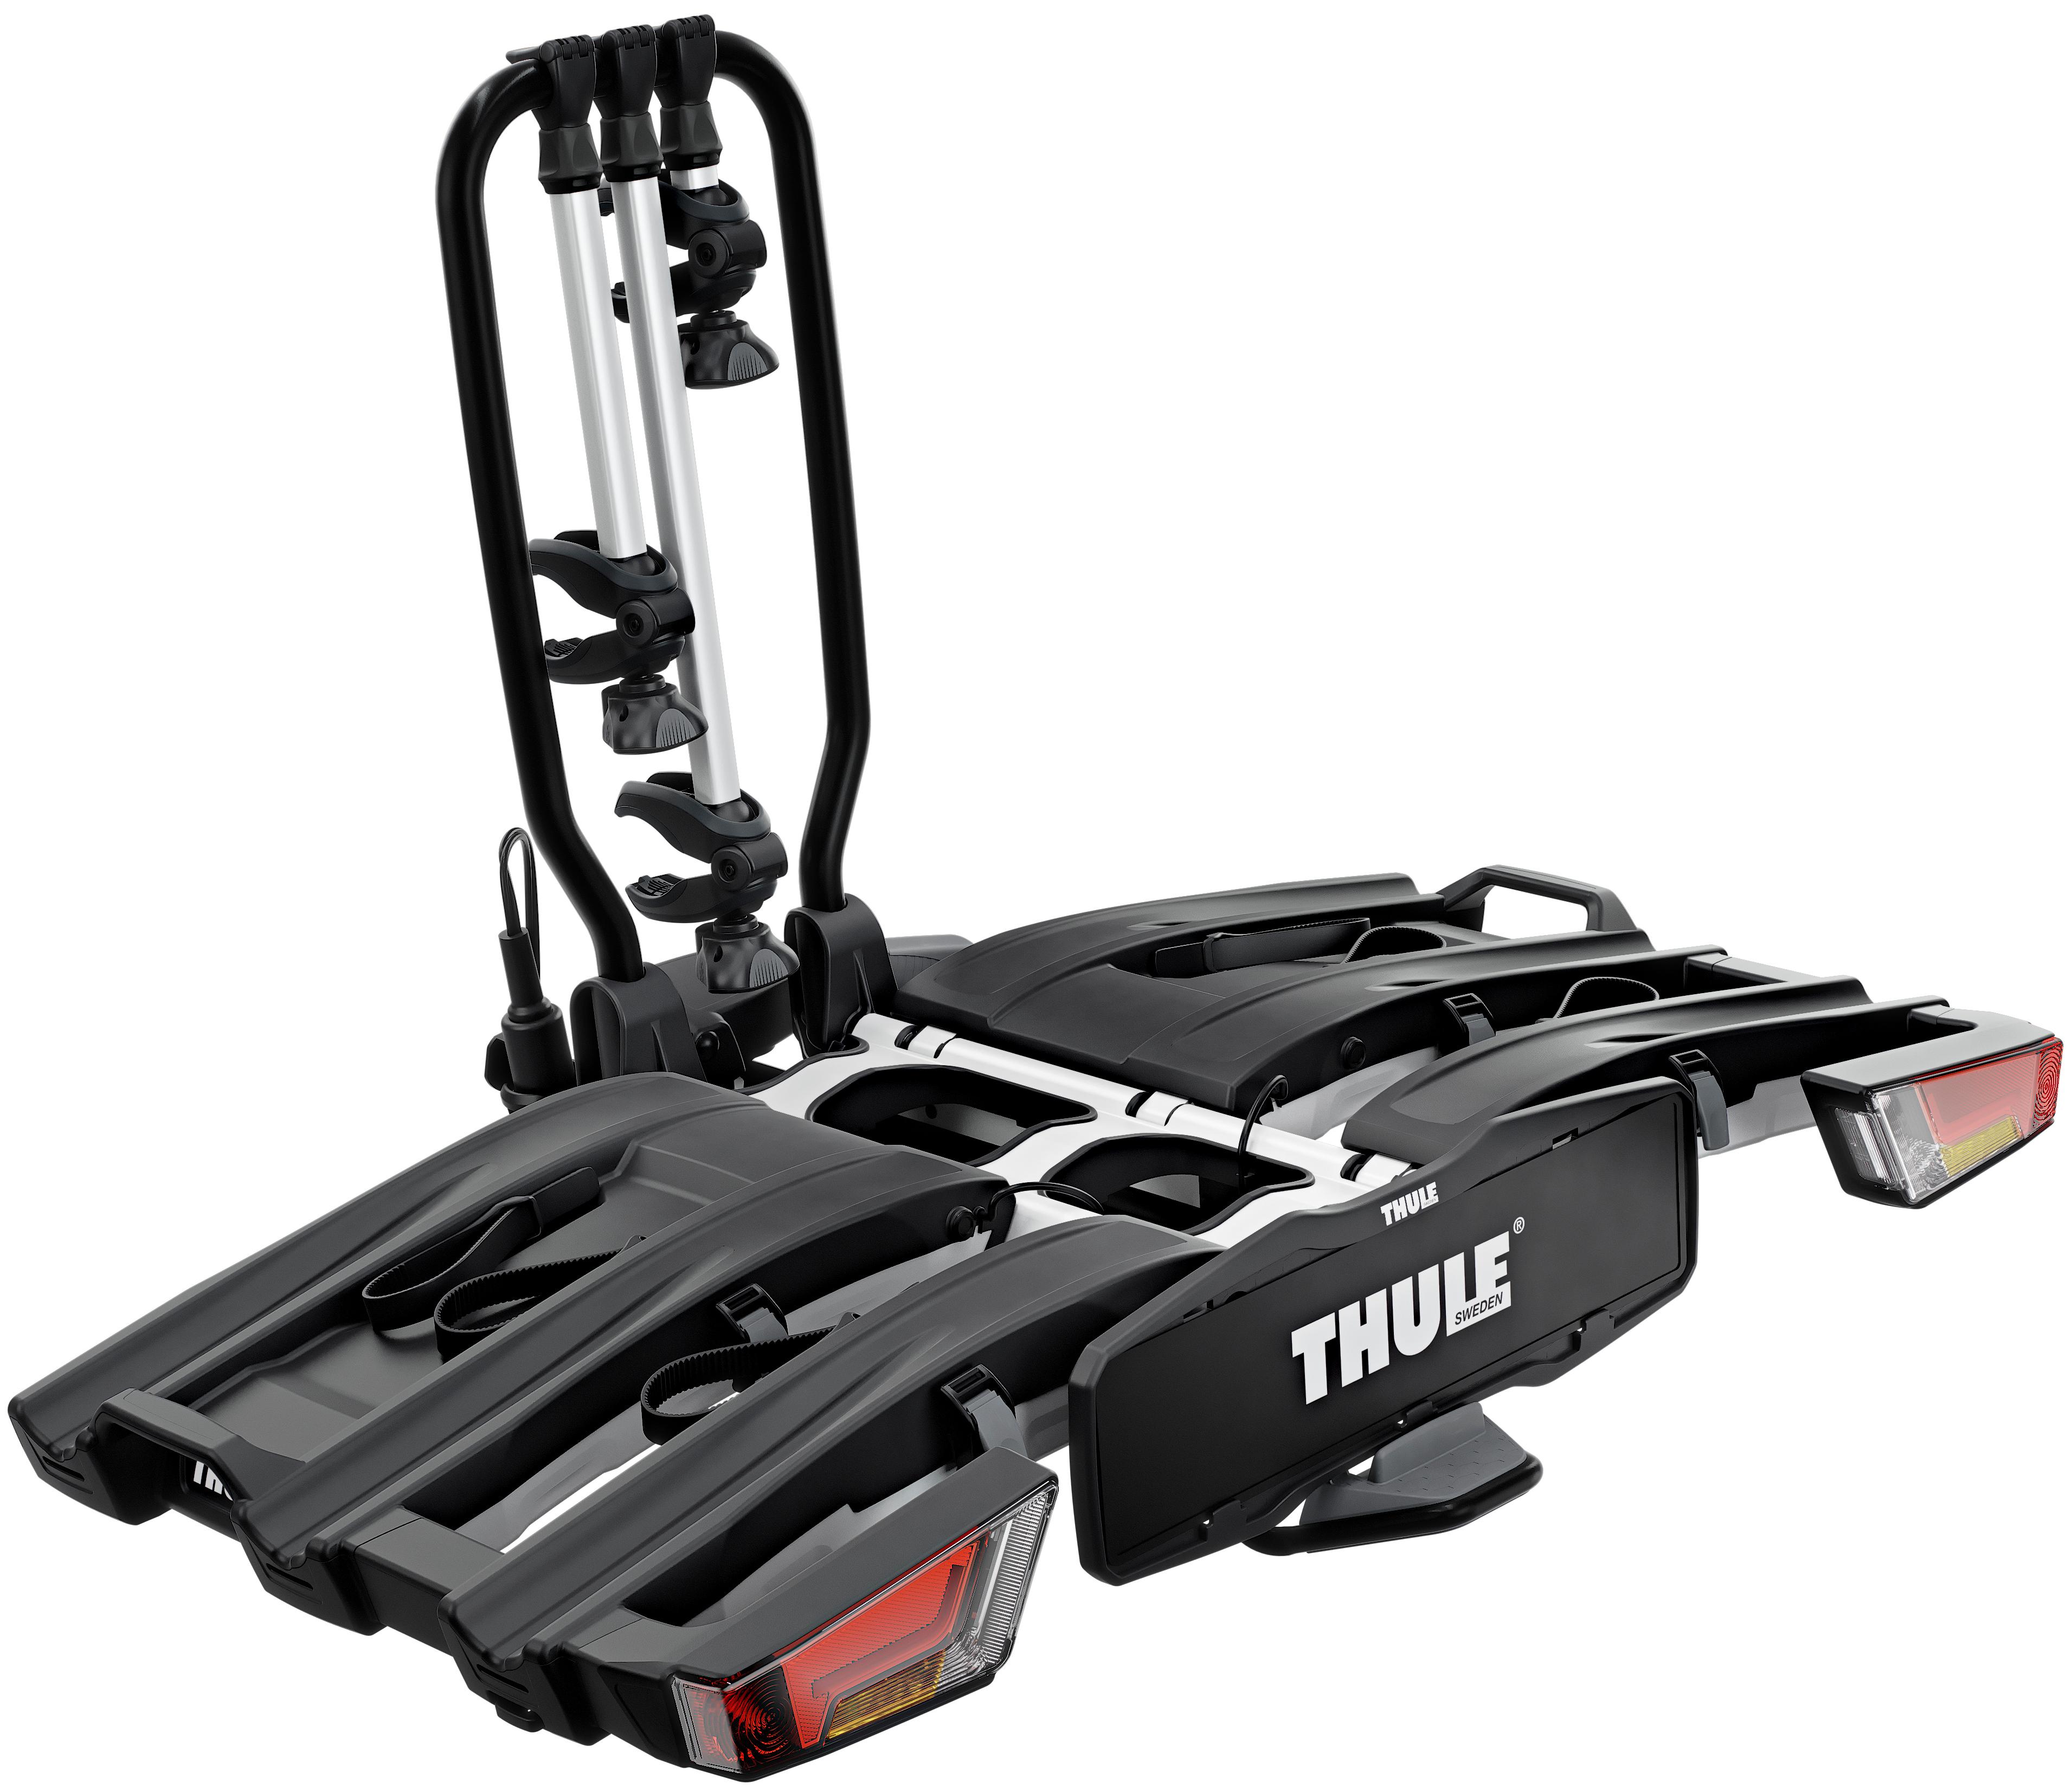 thule bike rack weight capacity